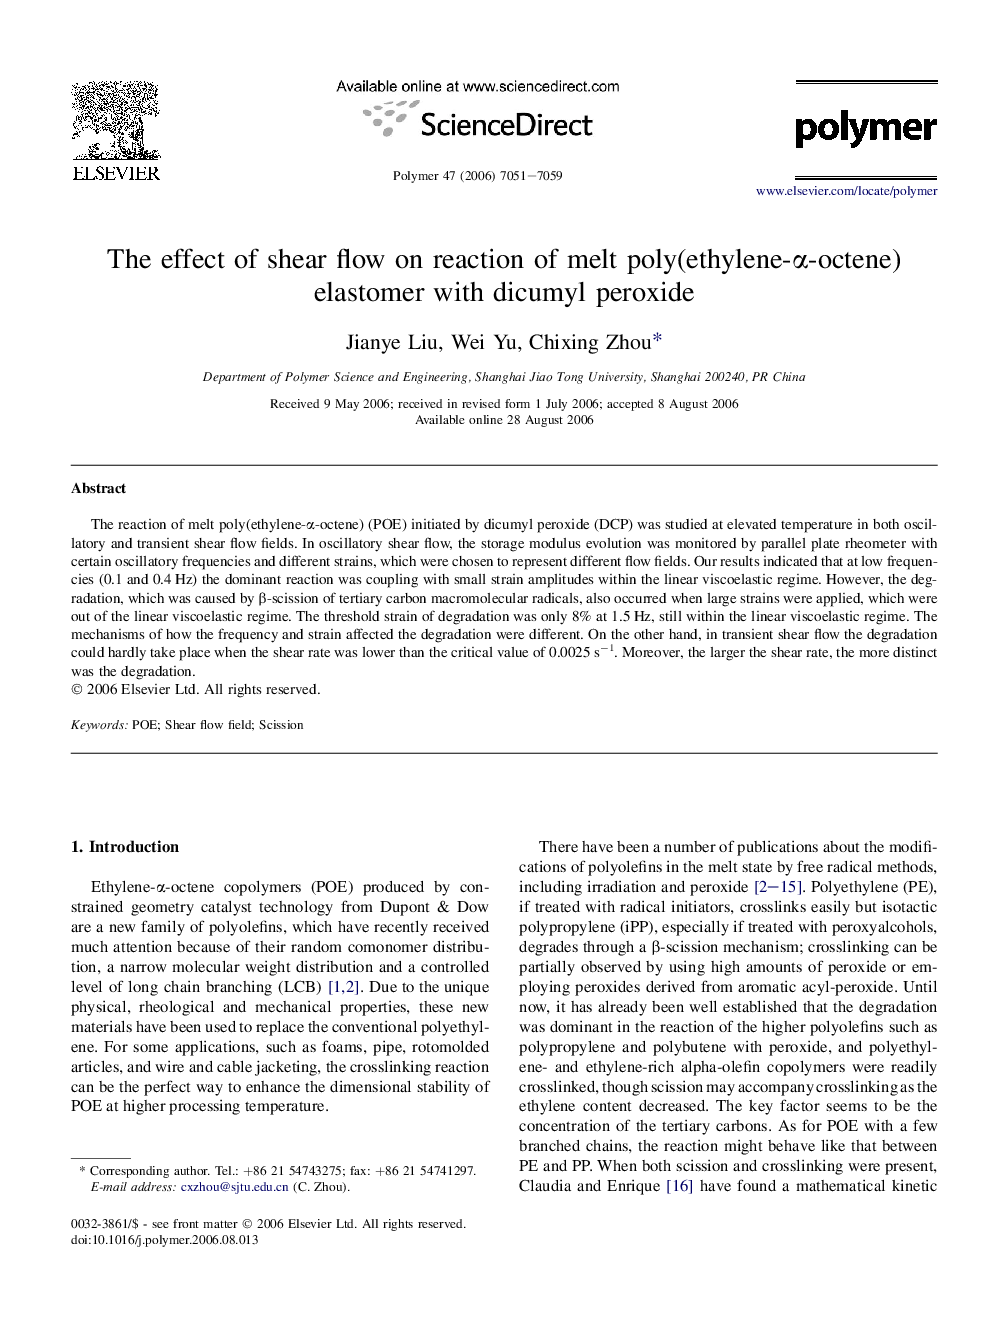 The effect of shear flow on reaction of melt poly(ethylene-Î±-octene) elastomer with dicumyl peroxide